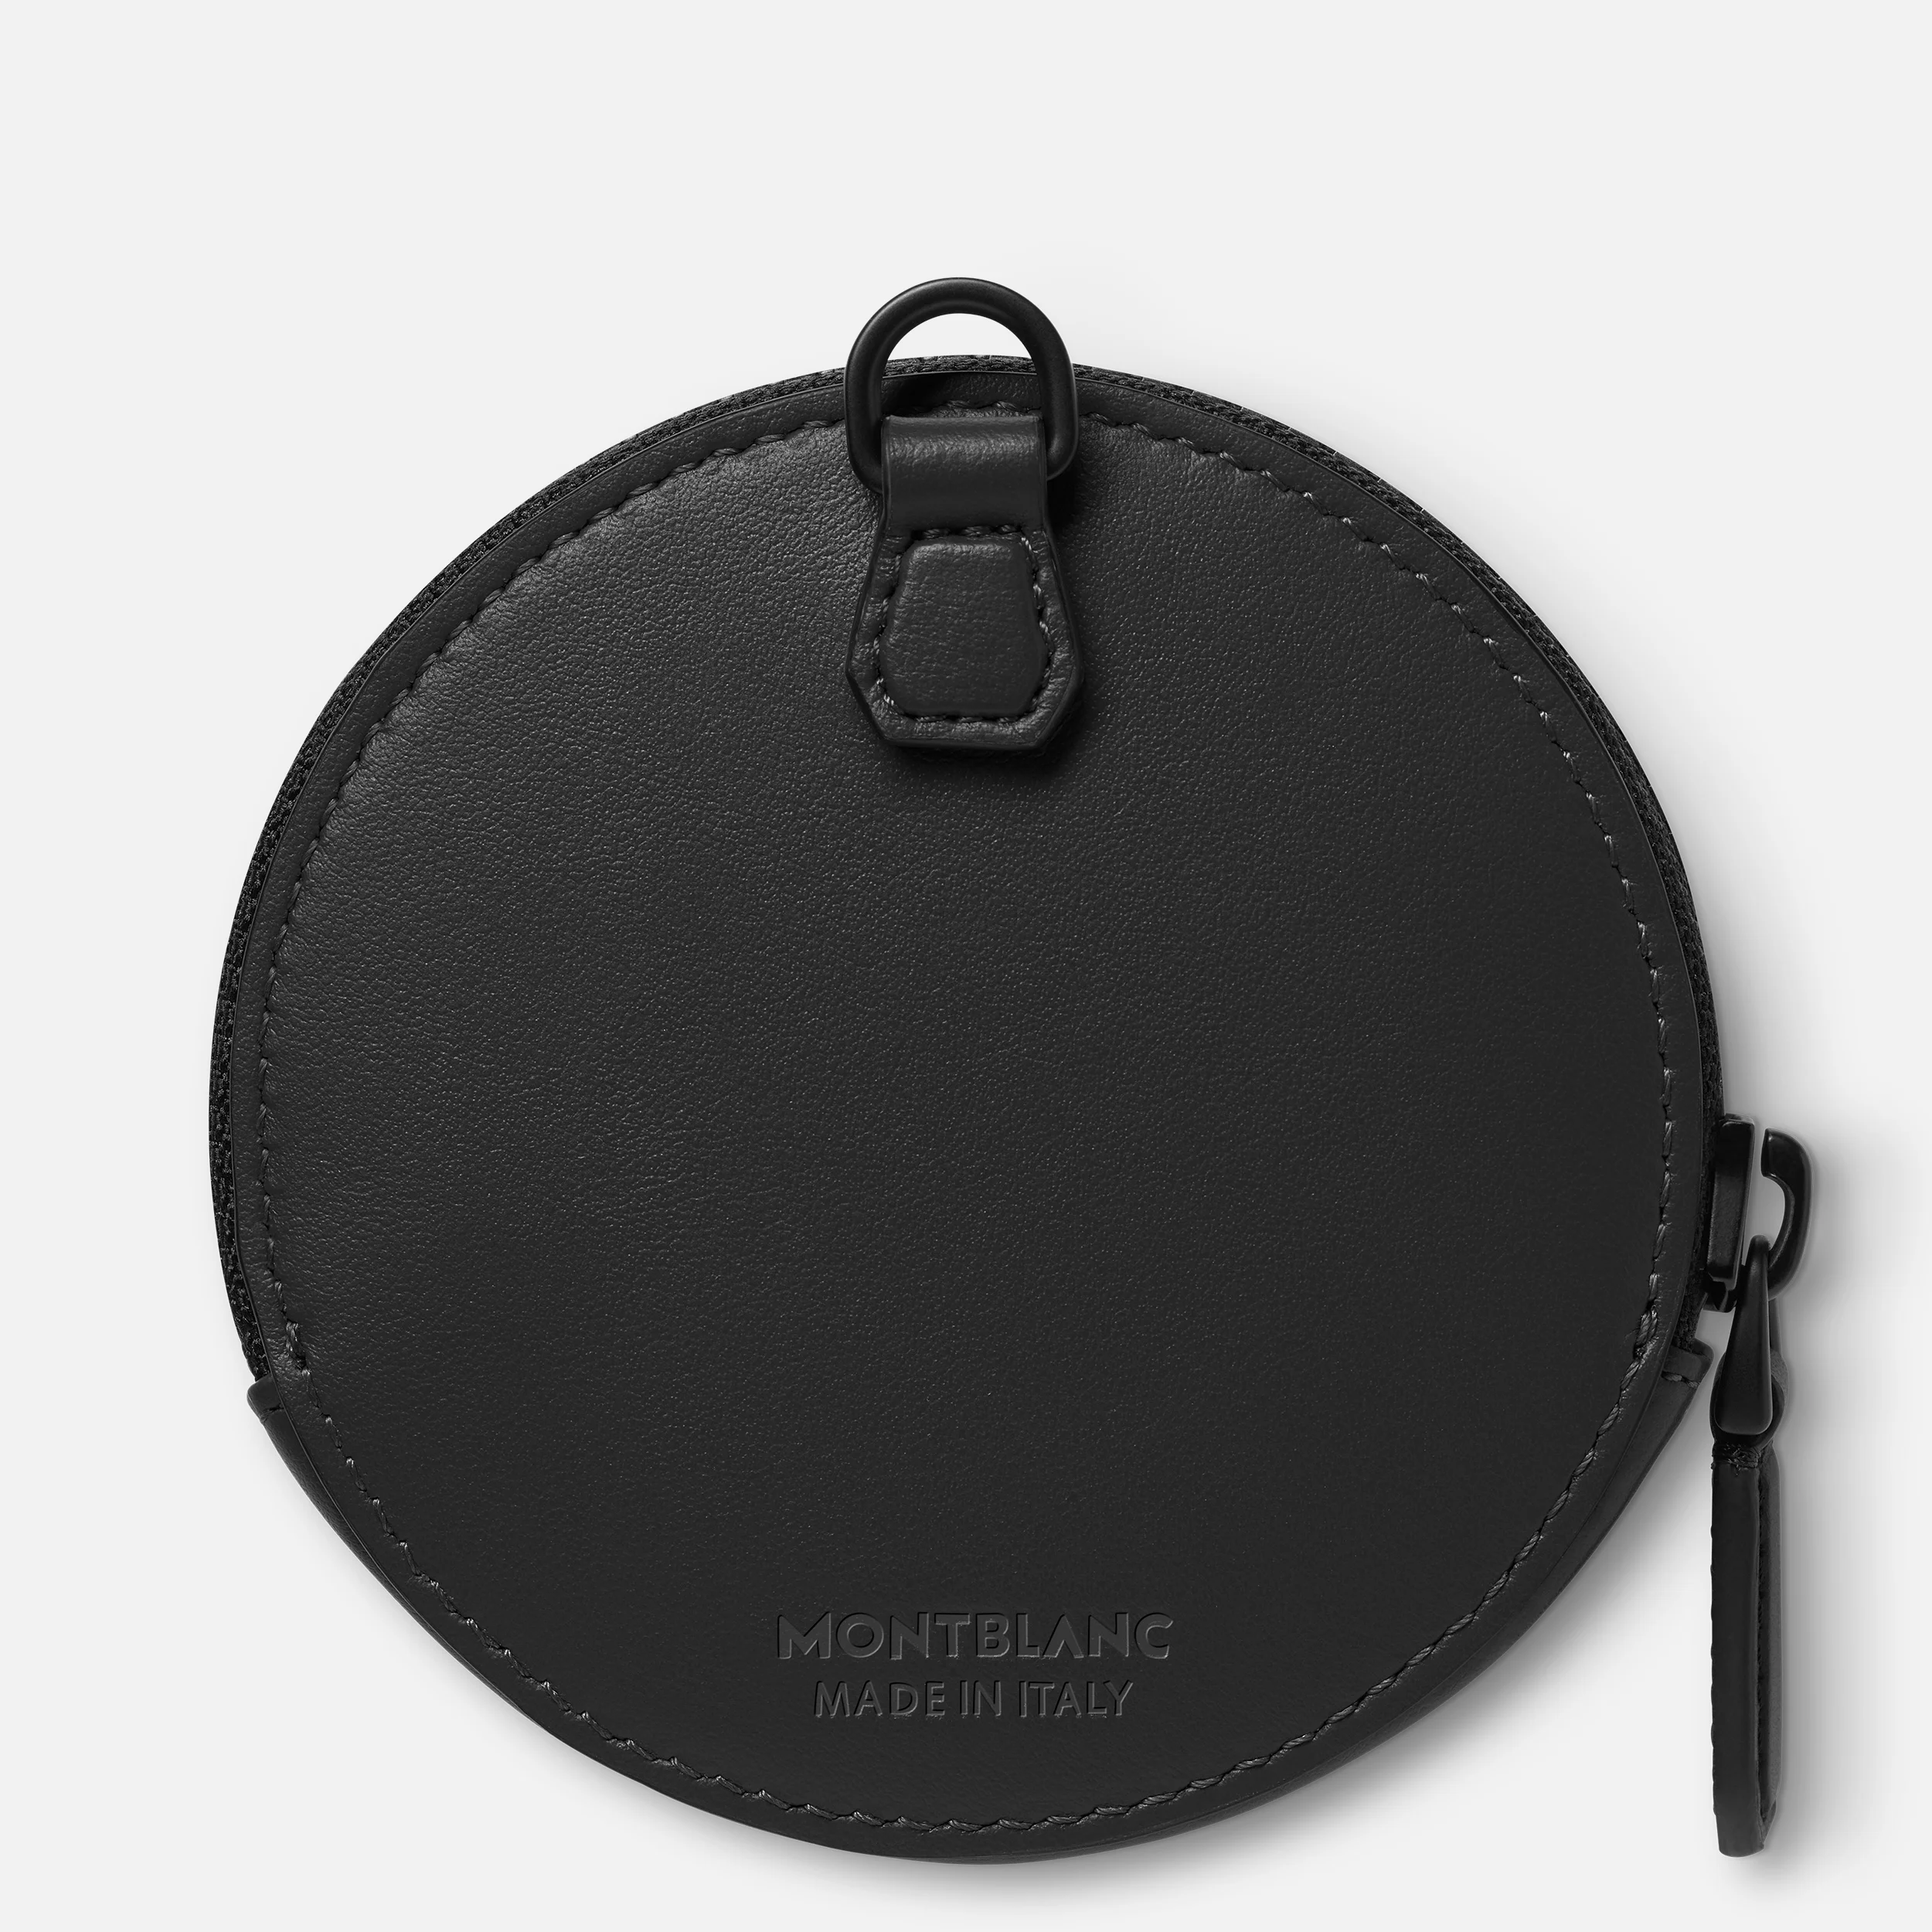 Montblanc Extreme 3.0 Round Case 6cc Black - Pencraft the boutique